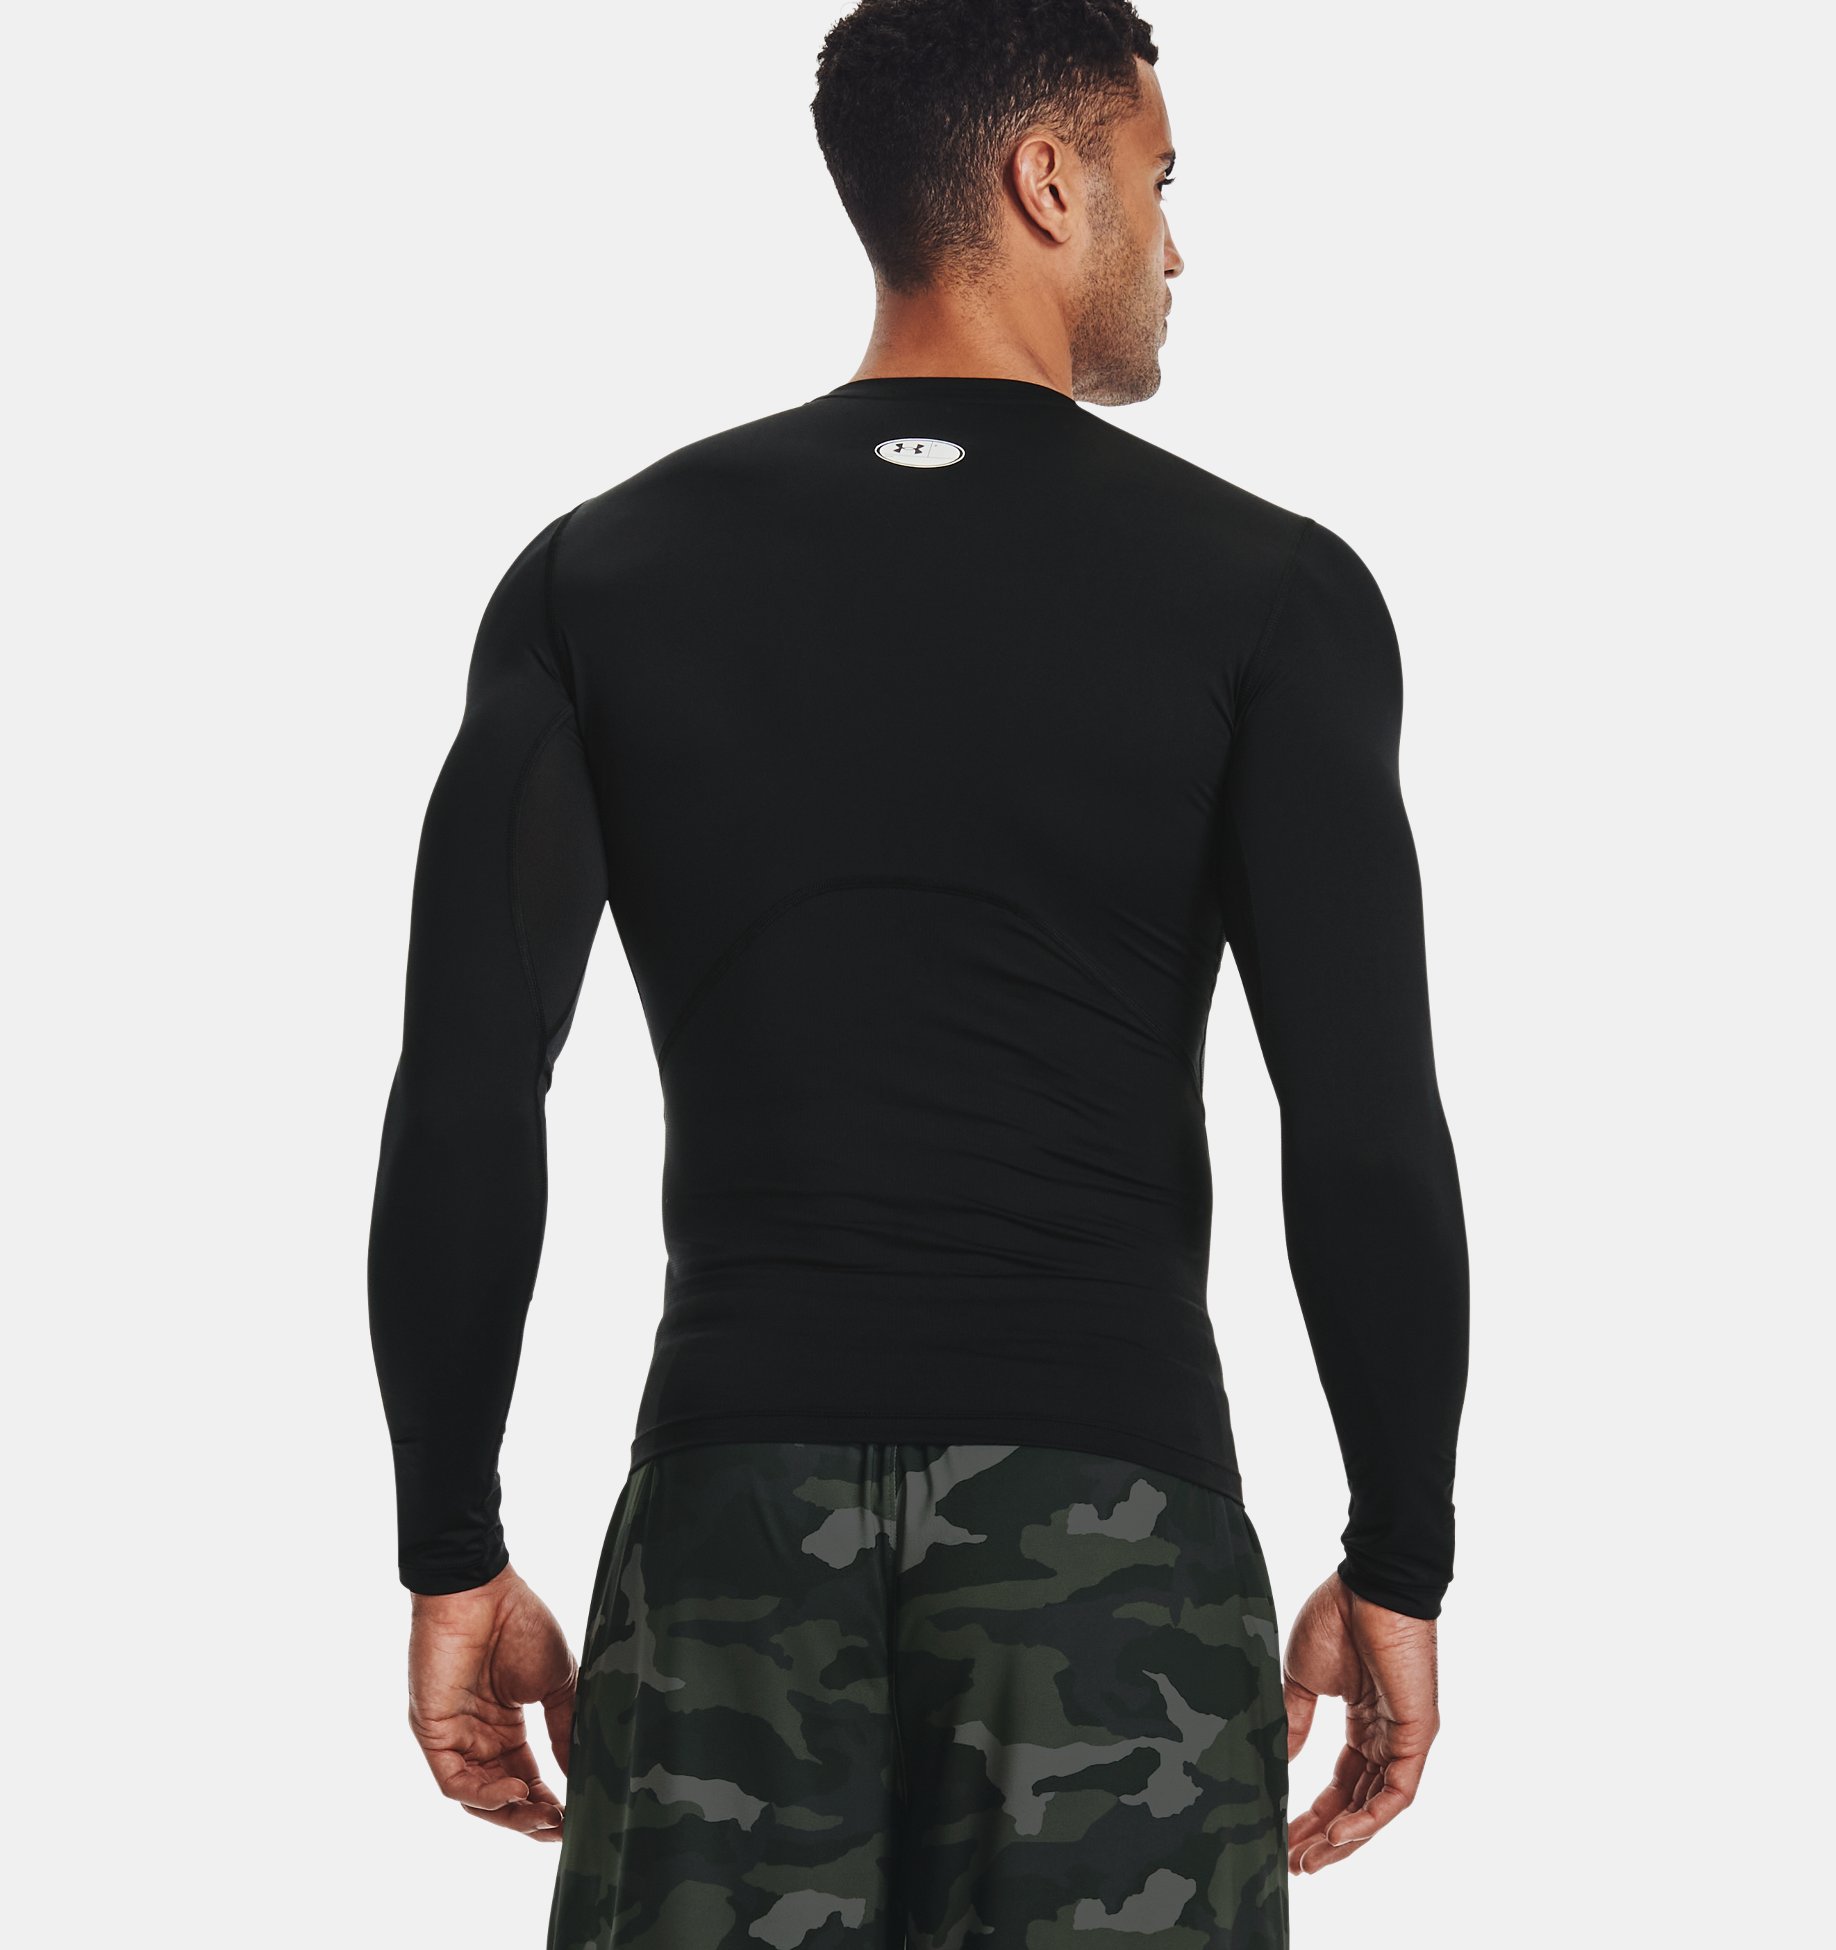 Under Armour Men's HeatGear Compression Long-Sleeve T-Shirt